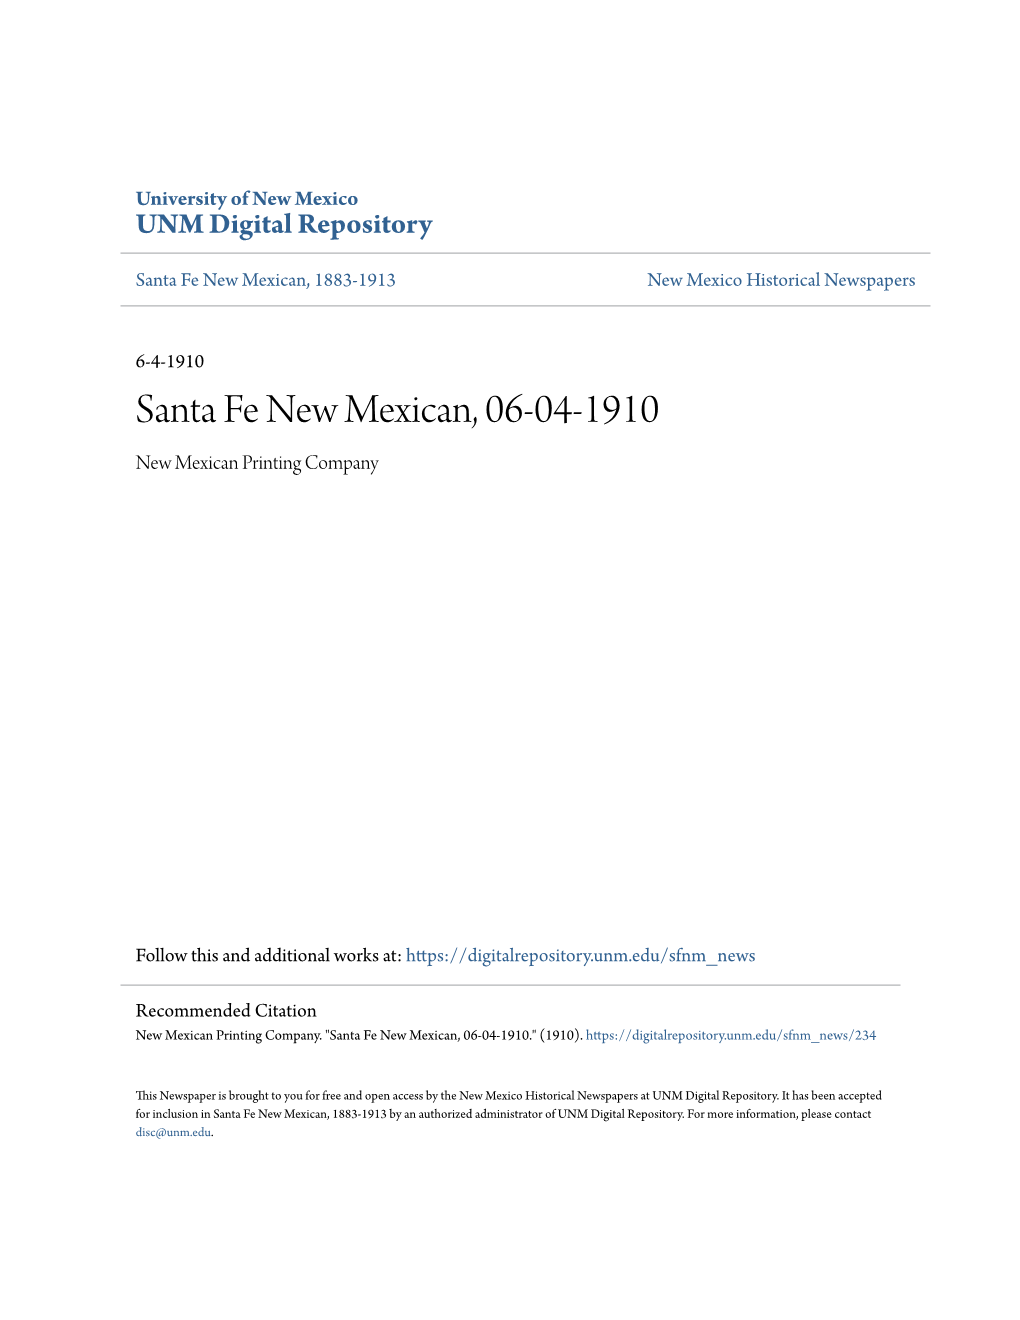 Santa Fe New Mexican, 06-04-1910 New Mexican Printing Company